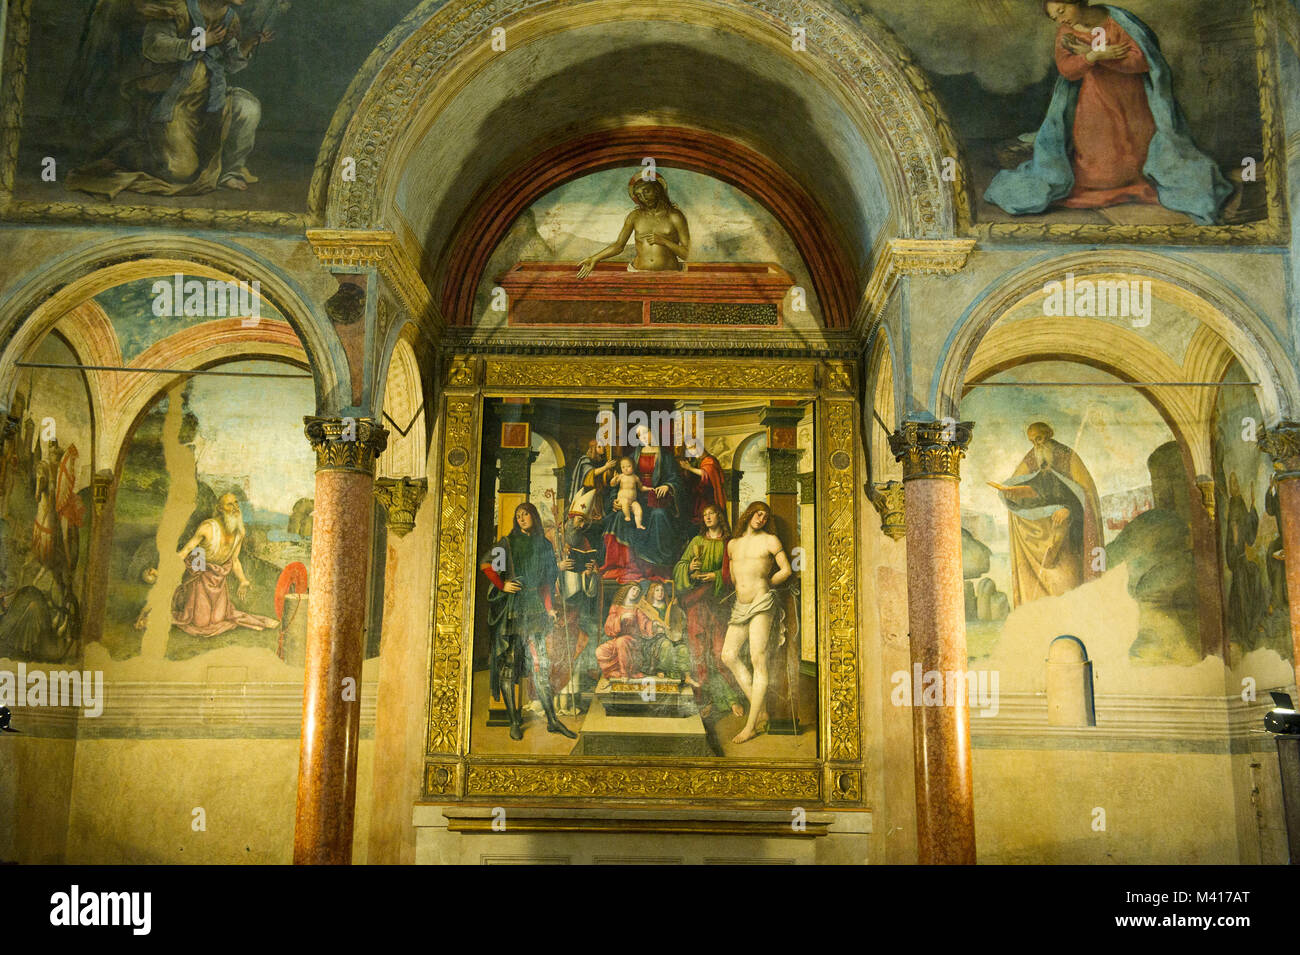 Italy, Emilia Romagna, Bologna, The Basilica of San Giacomo Maggiore. In the church there is the chapel Bentivoglio, splendid half-fifteenth century architecture, full of Renaissance artwork. Stock Photo